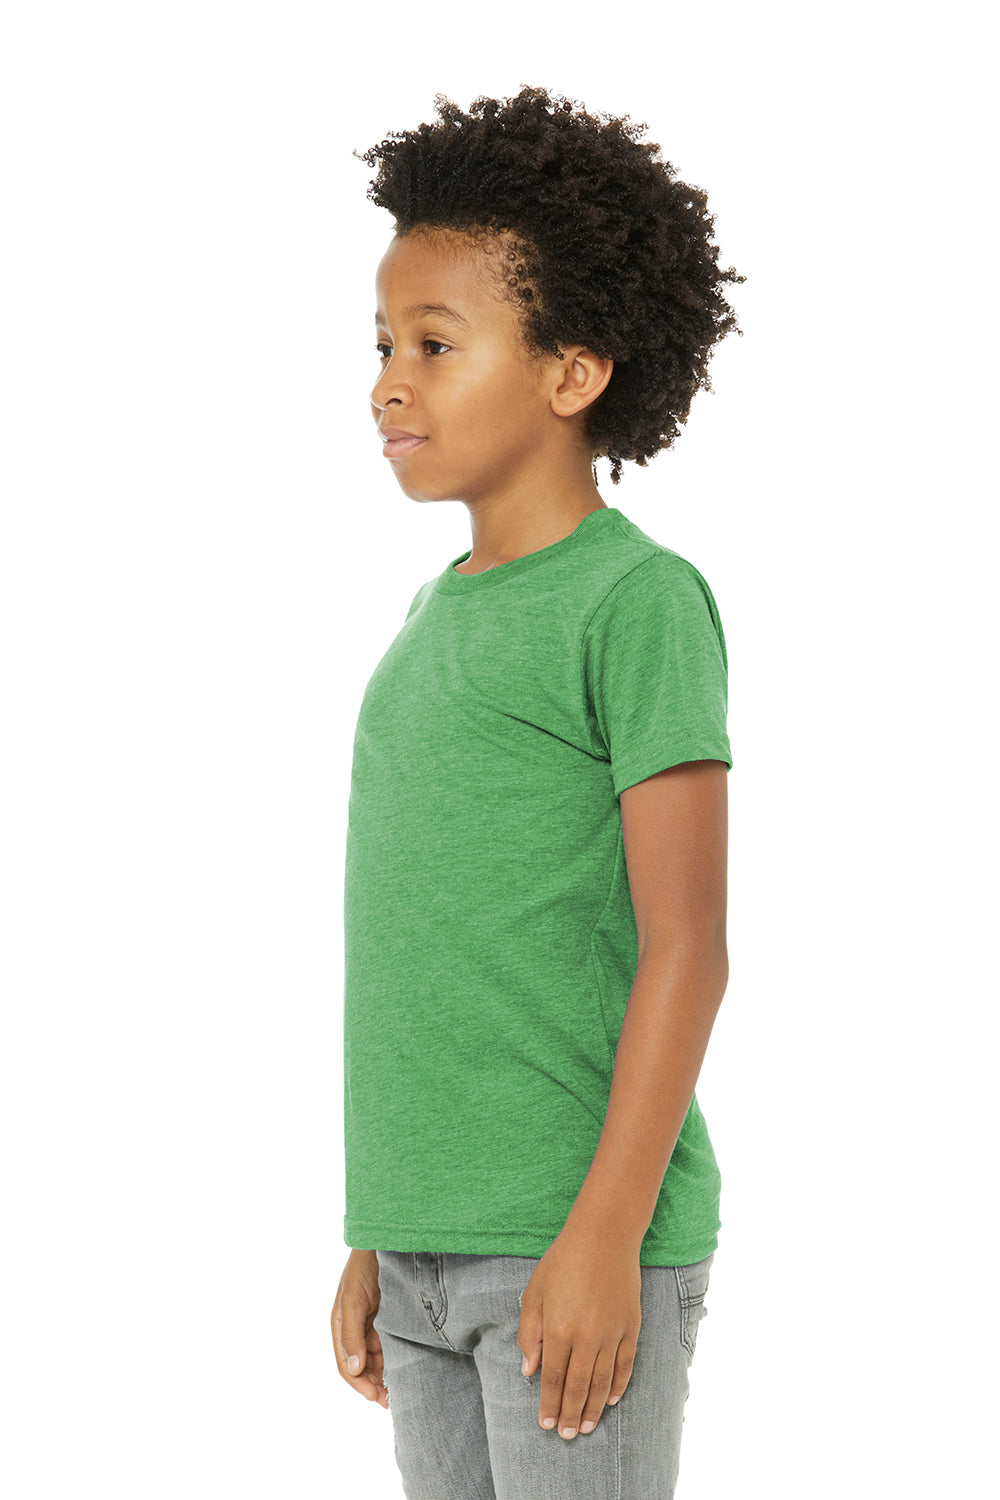 Bella + Canvas 3413Y Youth Short Sleeve Crewneck T-Shirt Green Model 3Q